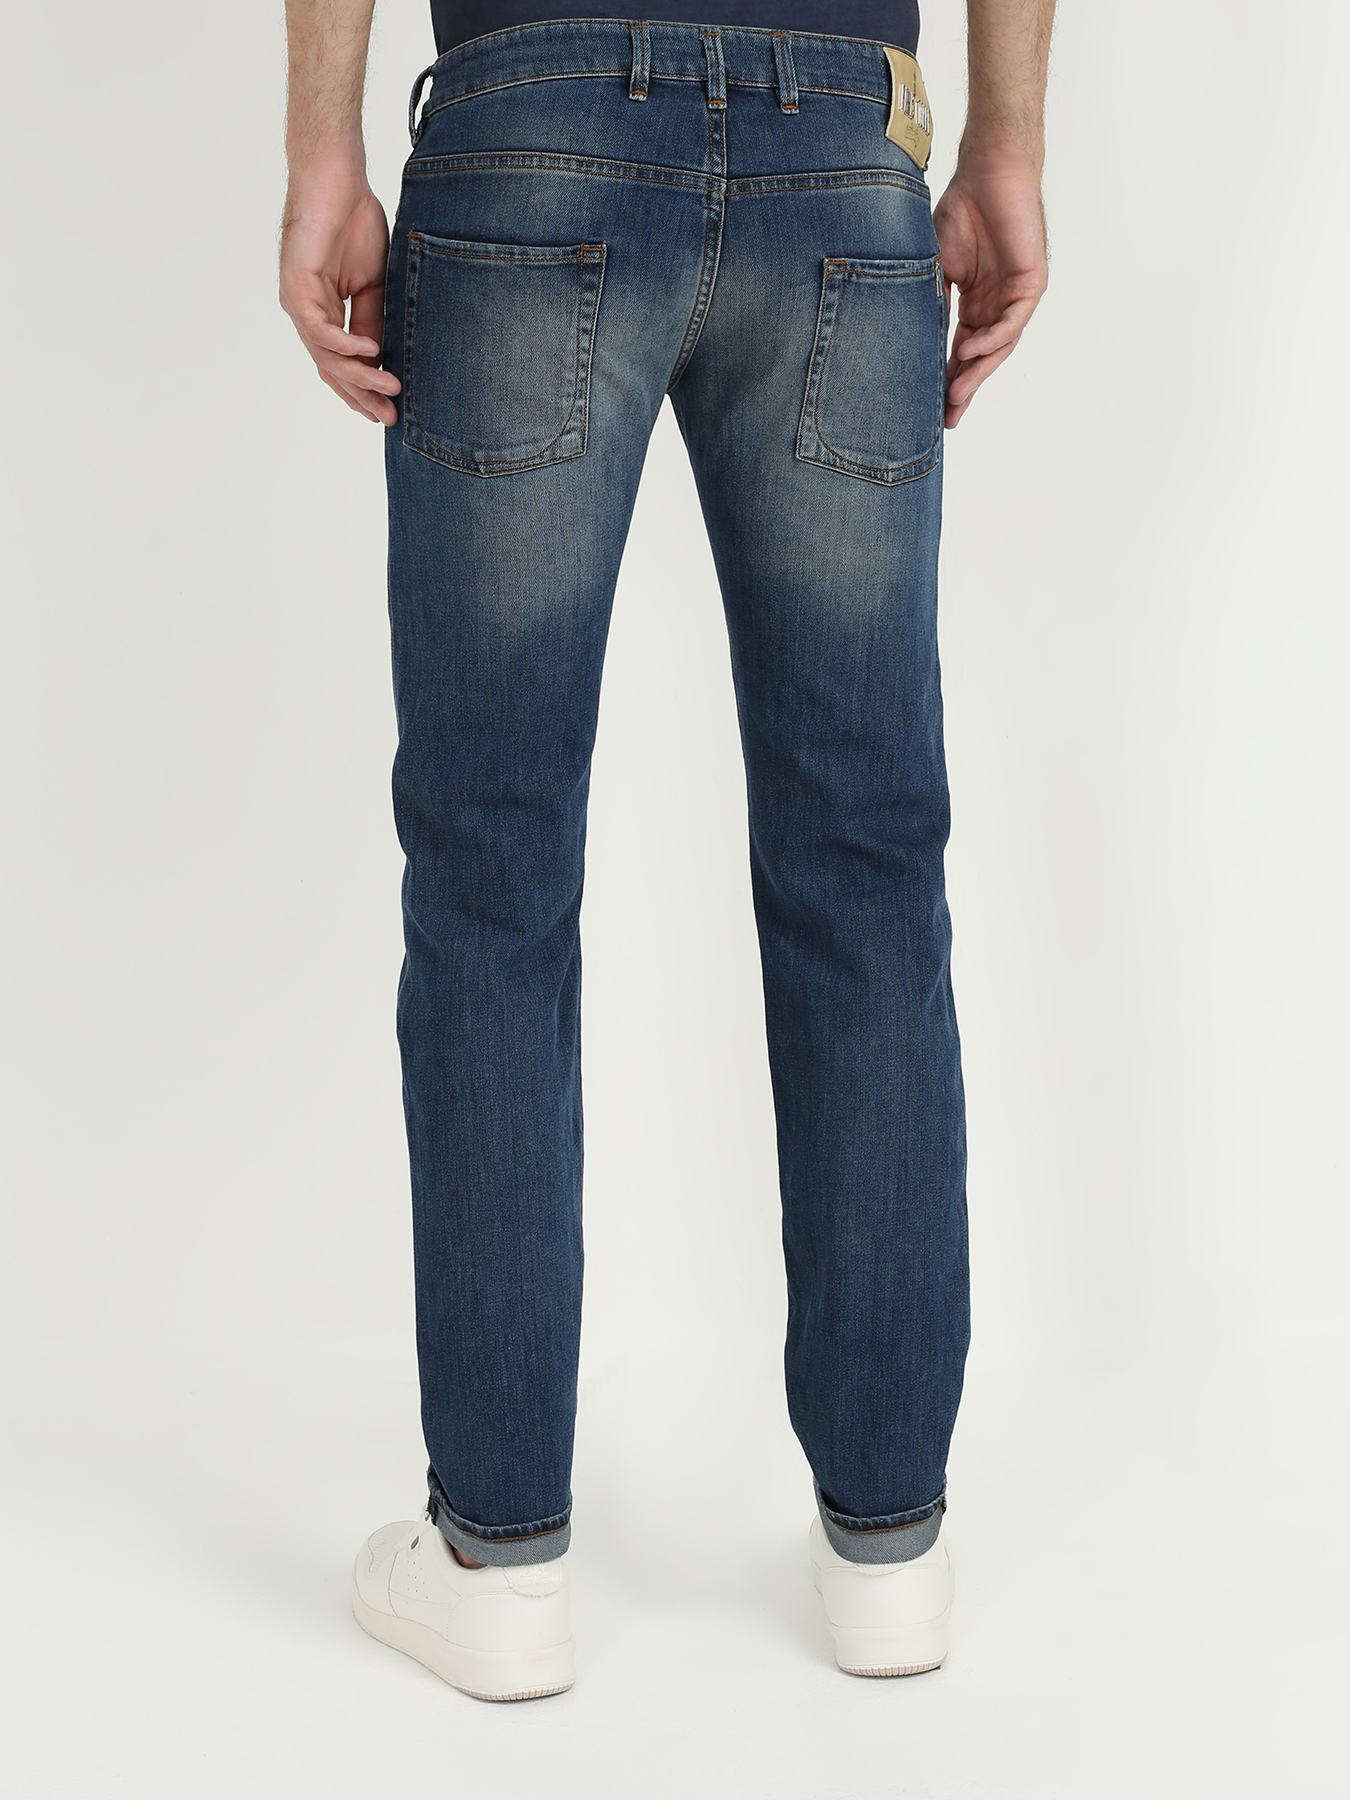 Finisterre Узкие мужские джинсы 322285-012 Фото 2